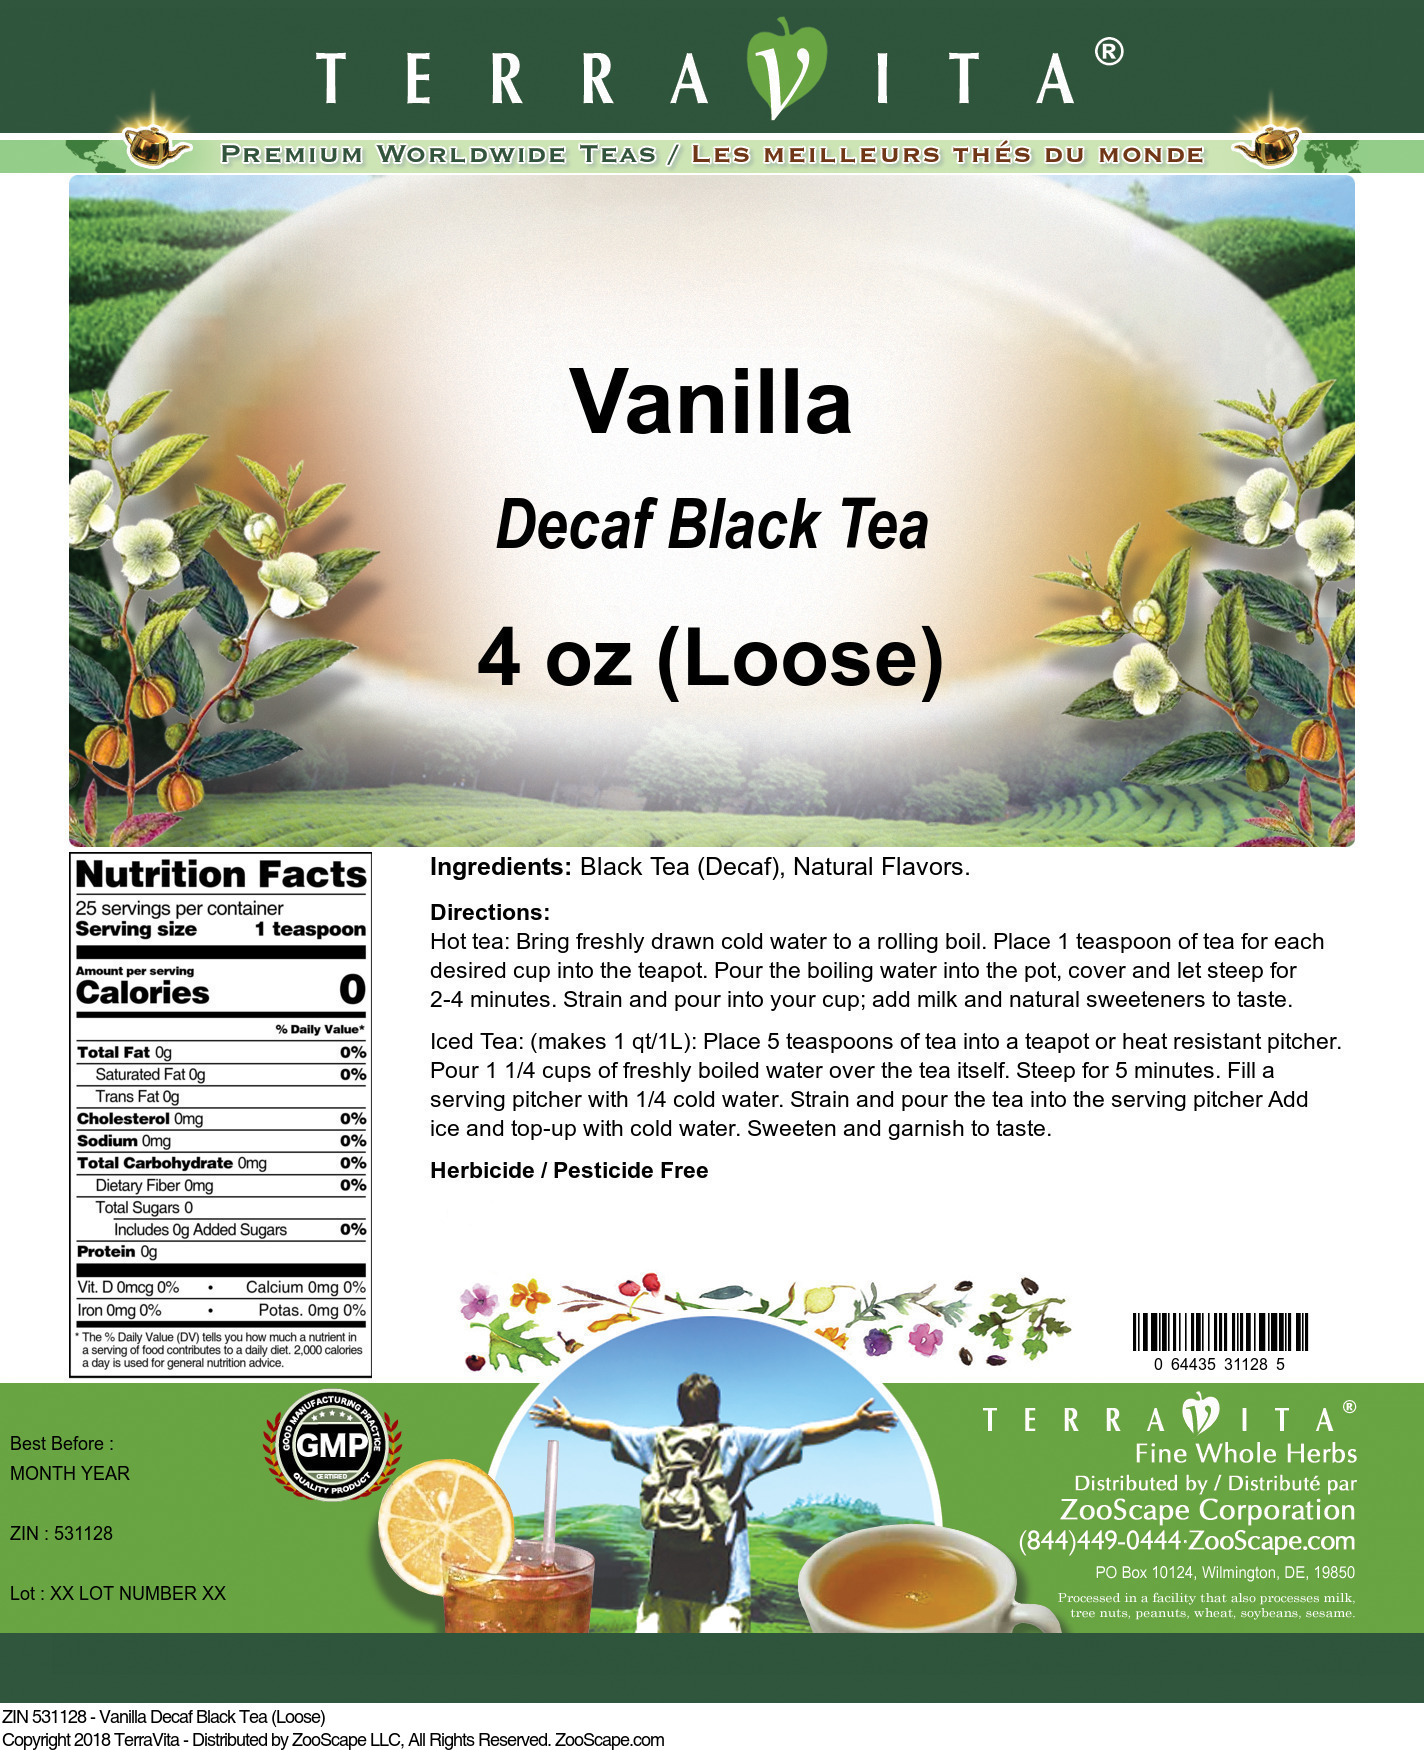 Vanilla Decaf Black Tea (Loose) - Label